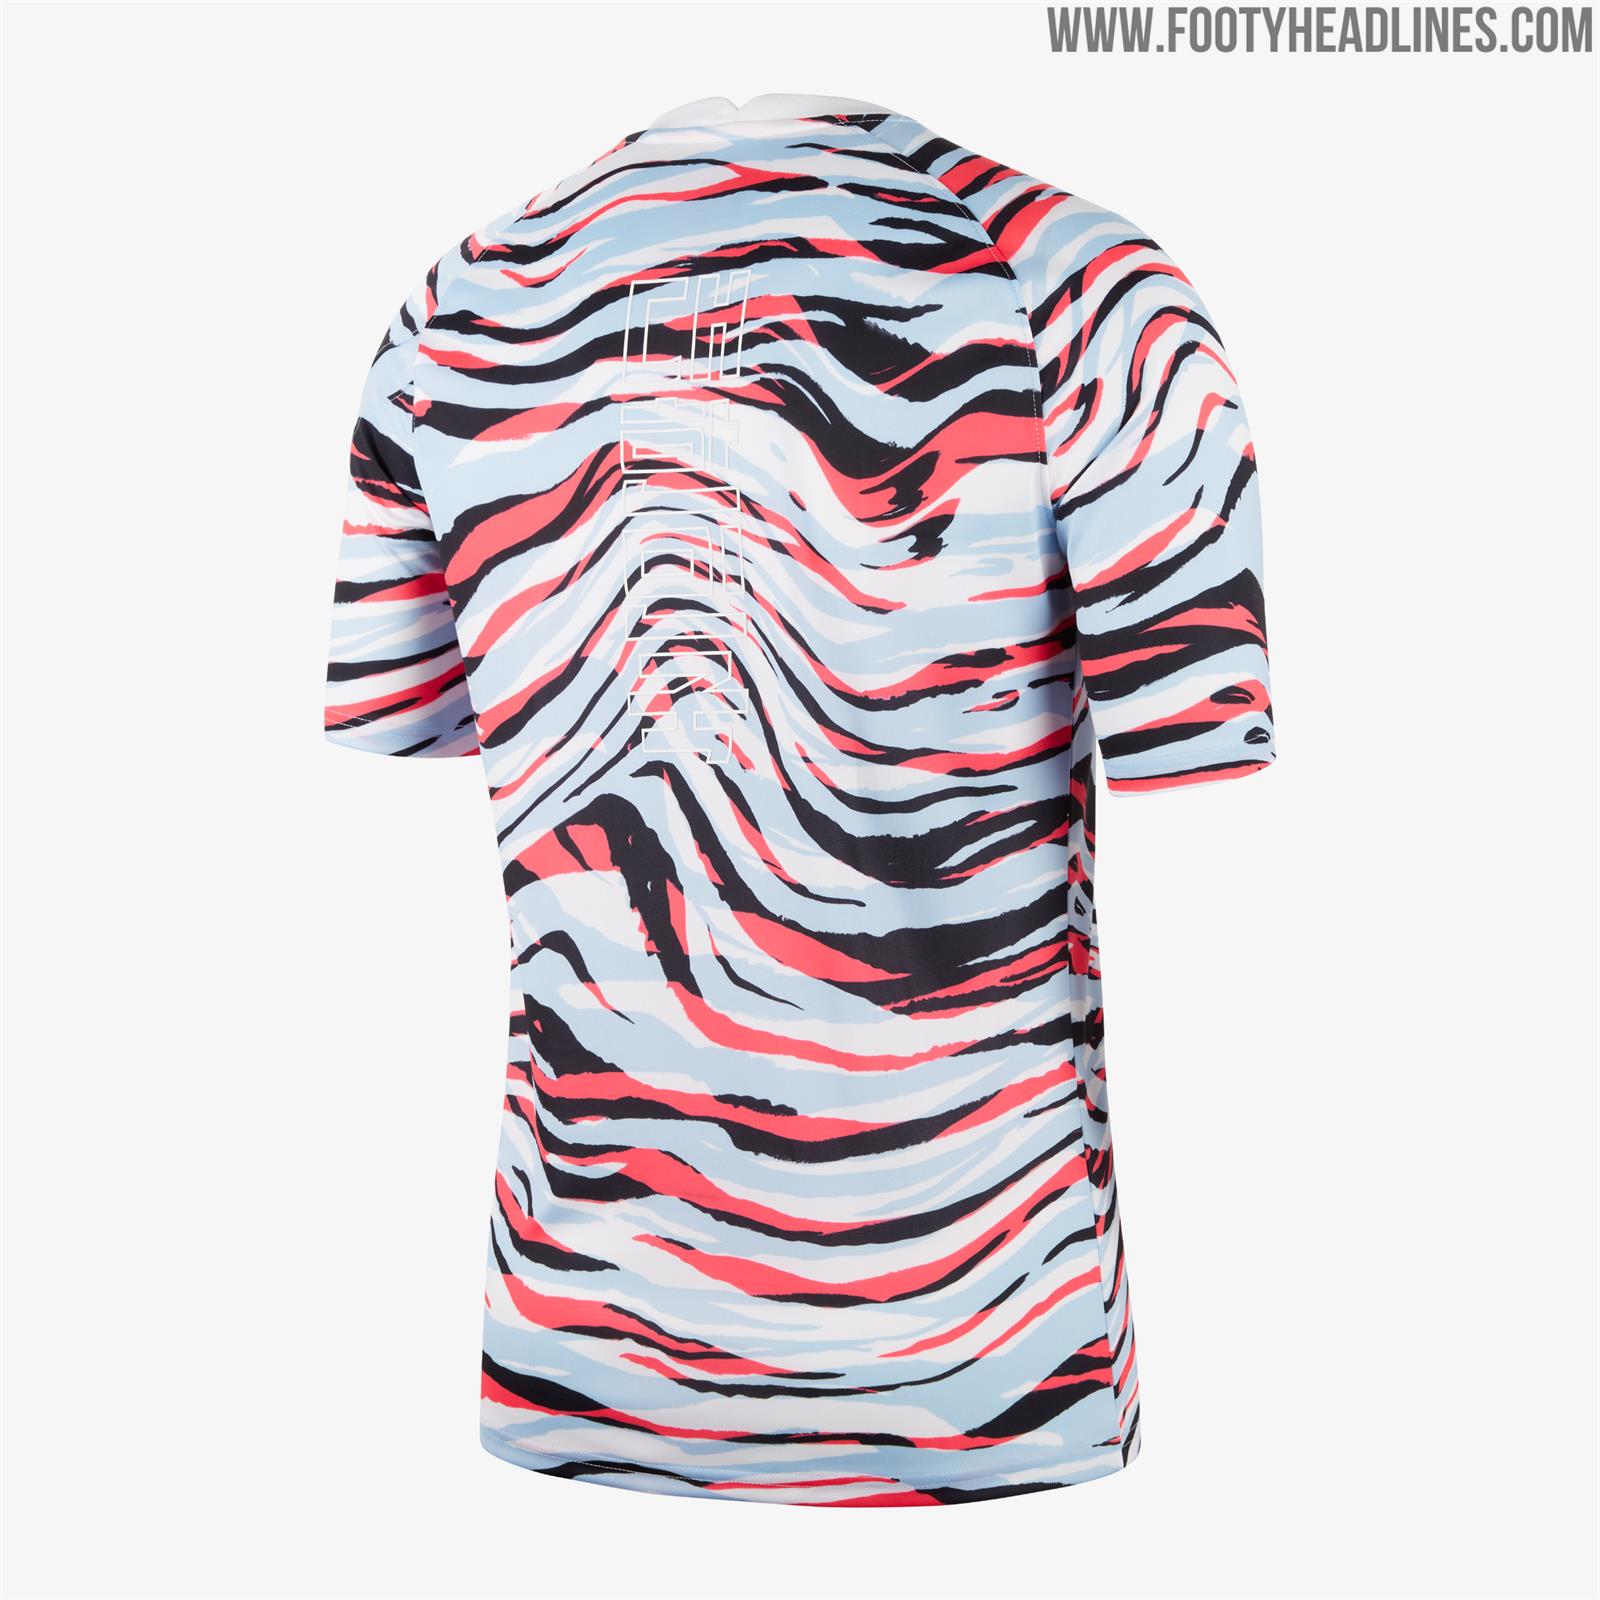 Amazing Nike South Korea 2020 Pre-Match Shirt Released - Footy Headlines